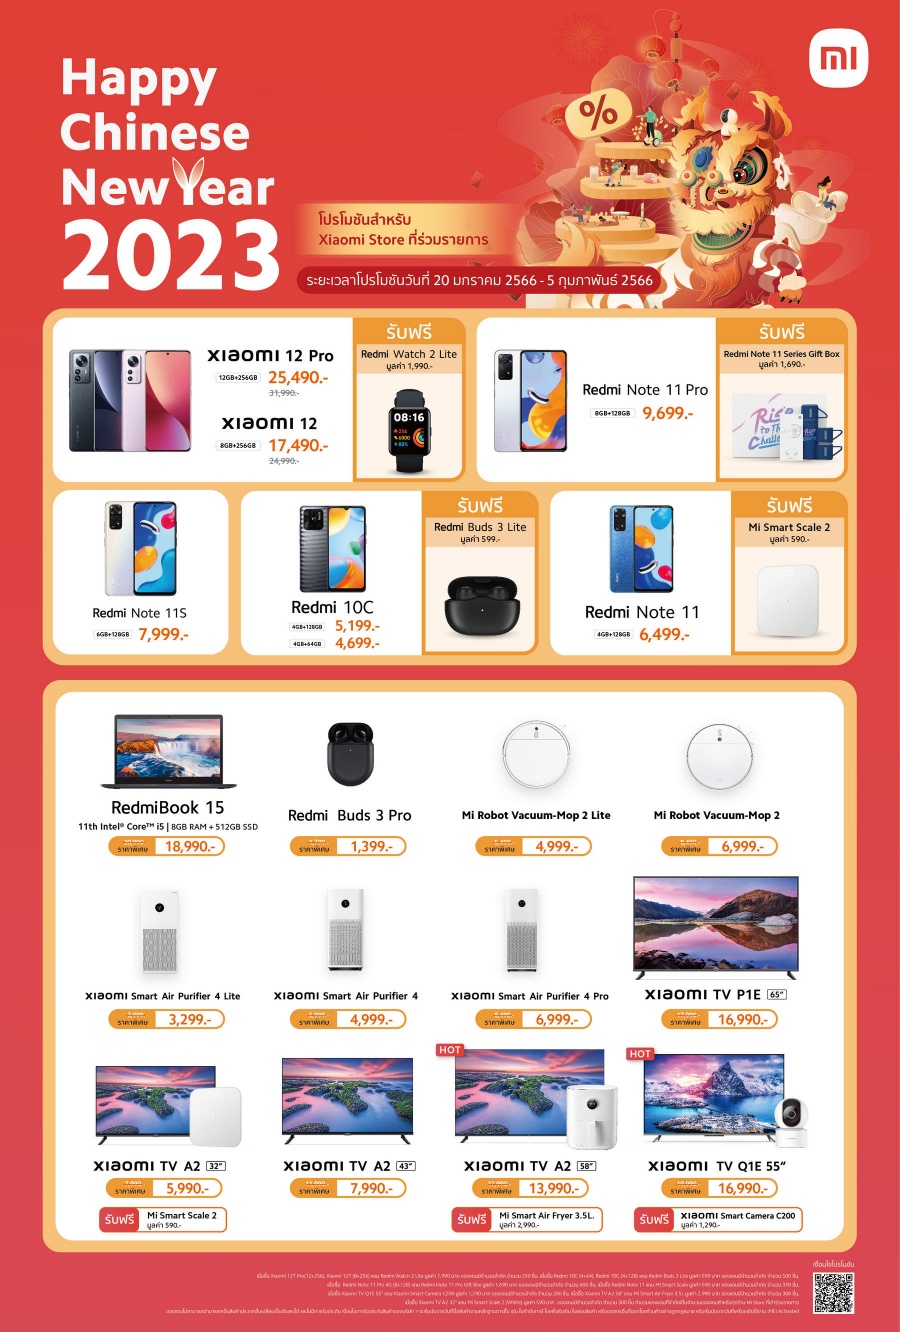 Xiaomi ต้อนรับต้นปี 2023 ด้วยโปรโมชัน Chinese New Year พบราคาพิเศษจากสมาร์ทโฟนและผลิตภัณฑ์ AIoT มากมาย